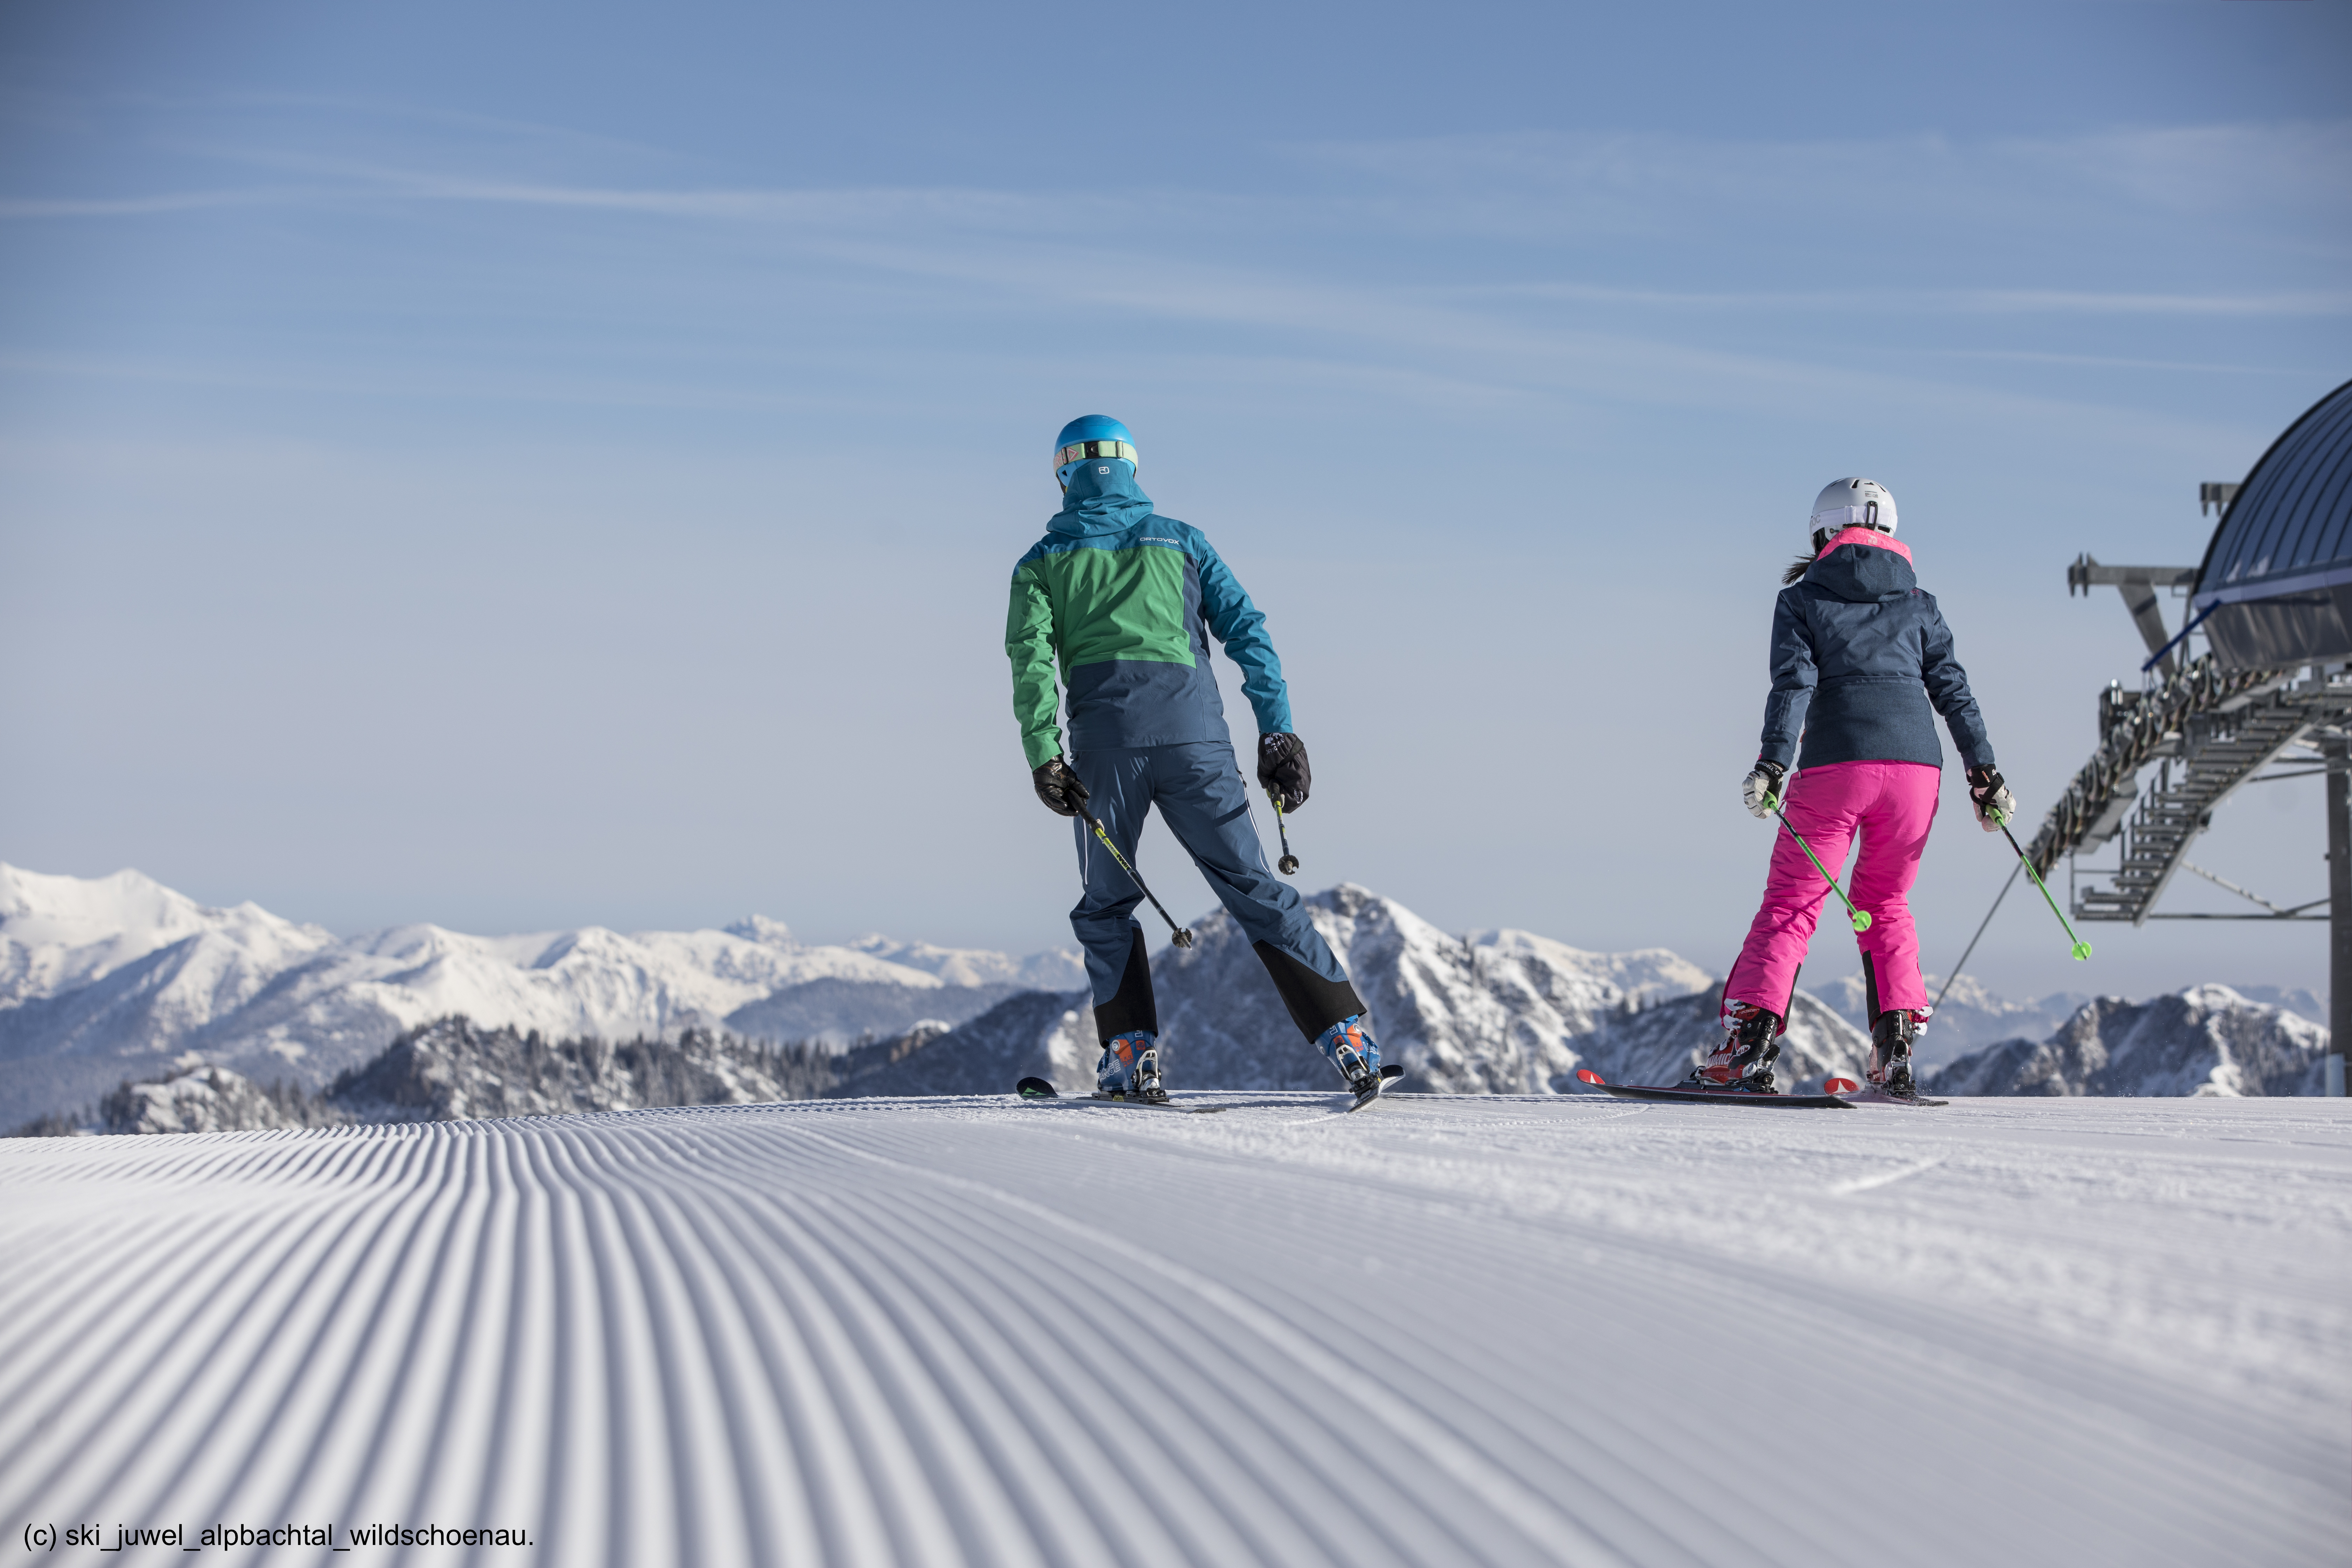 first_line_skiing_skifahrer_wiedersbergerhorn-c-ski_juwel_alpbachtal_wildschoenau.jpg